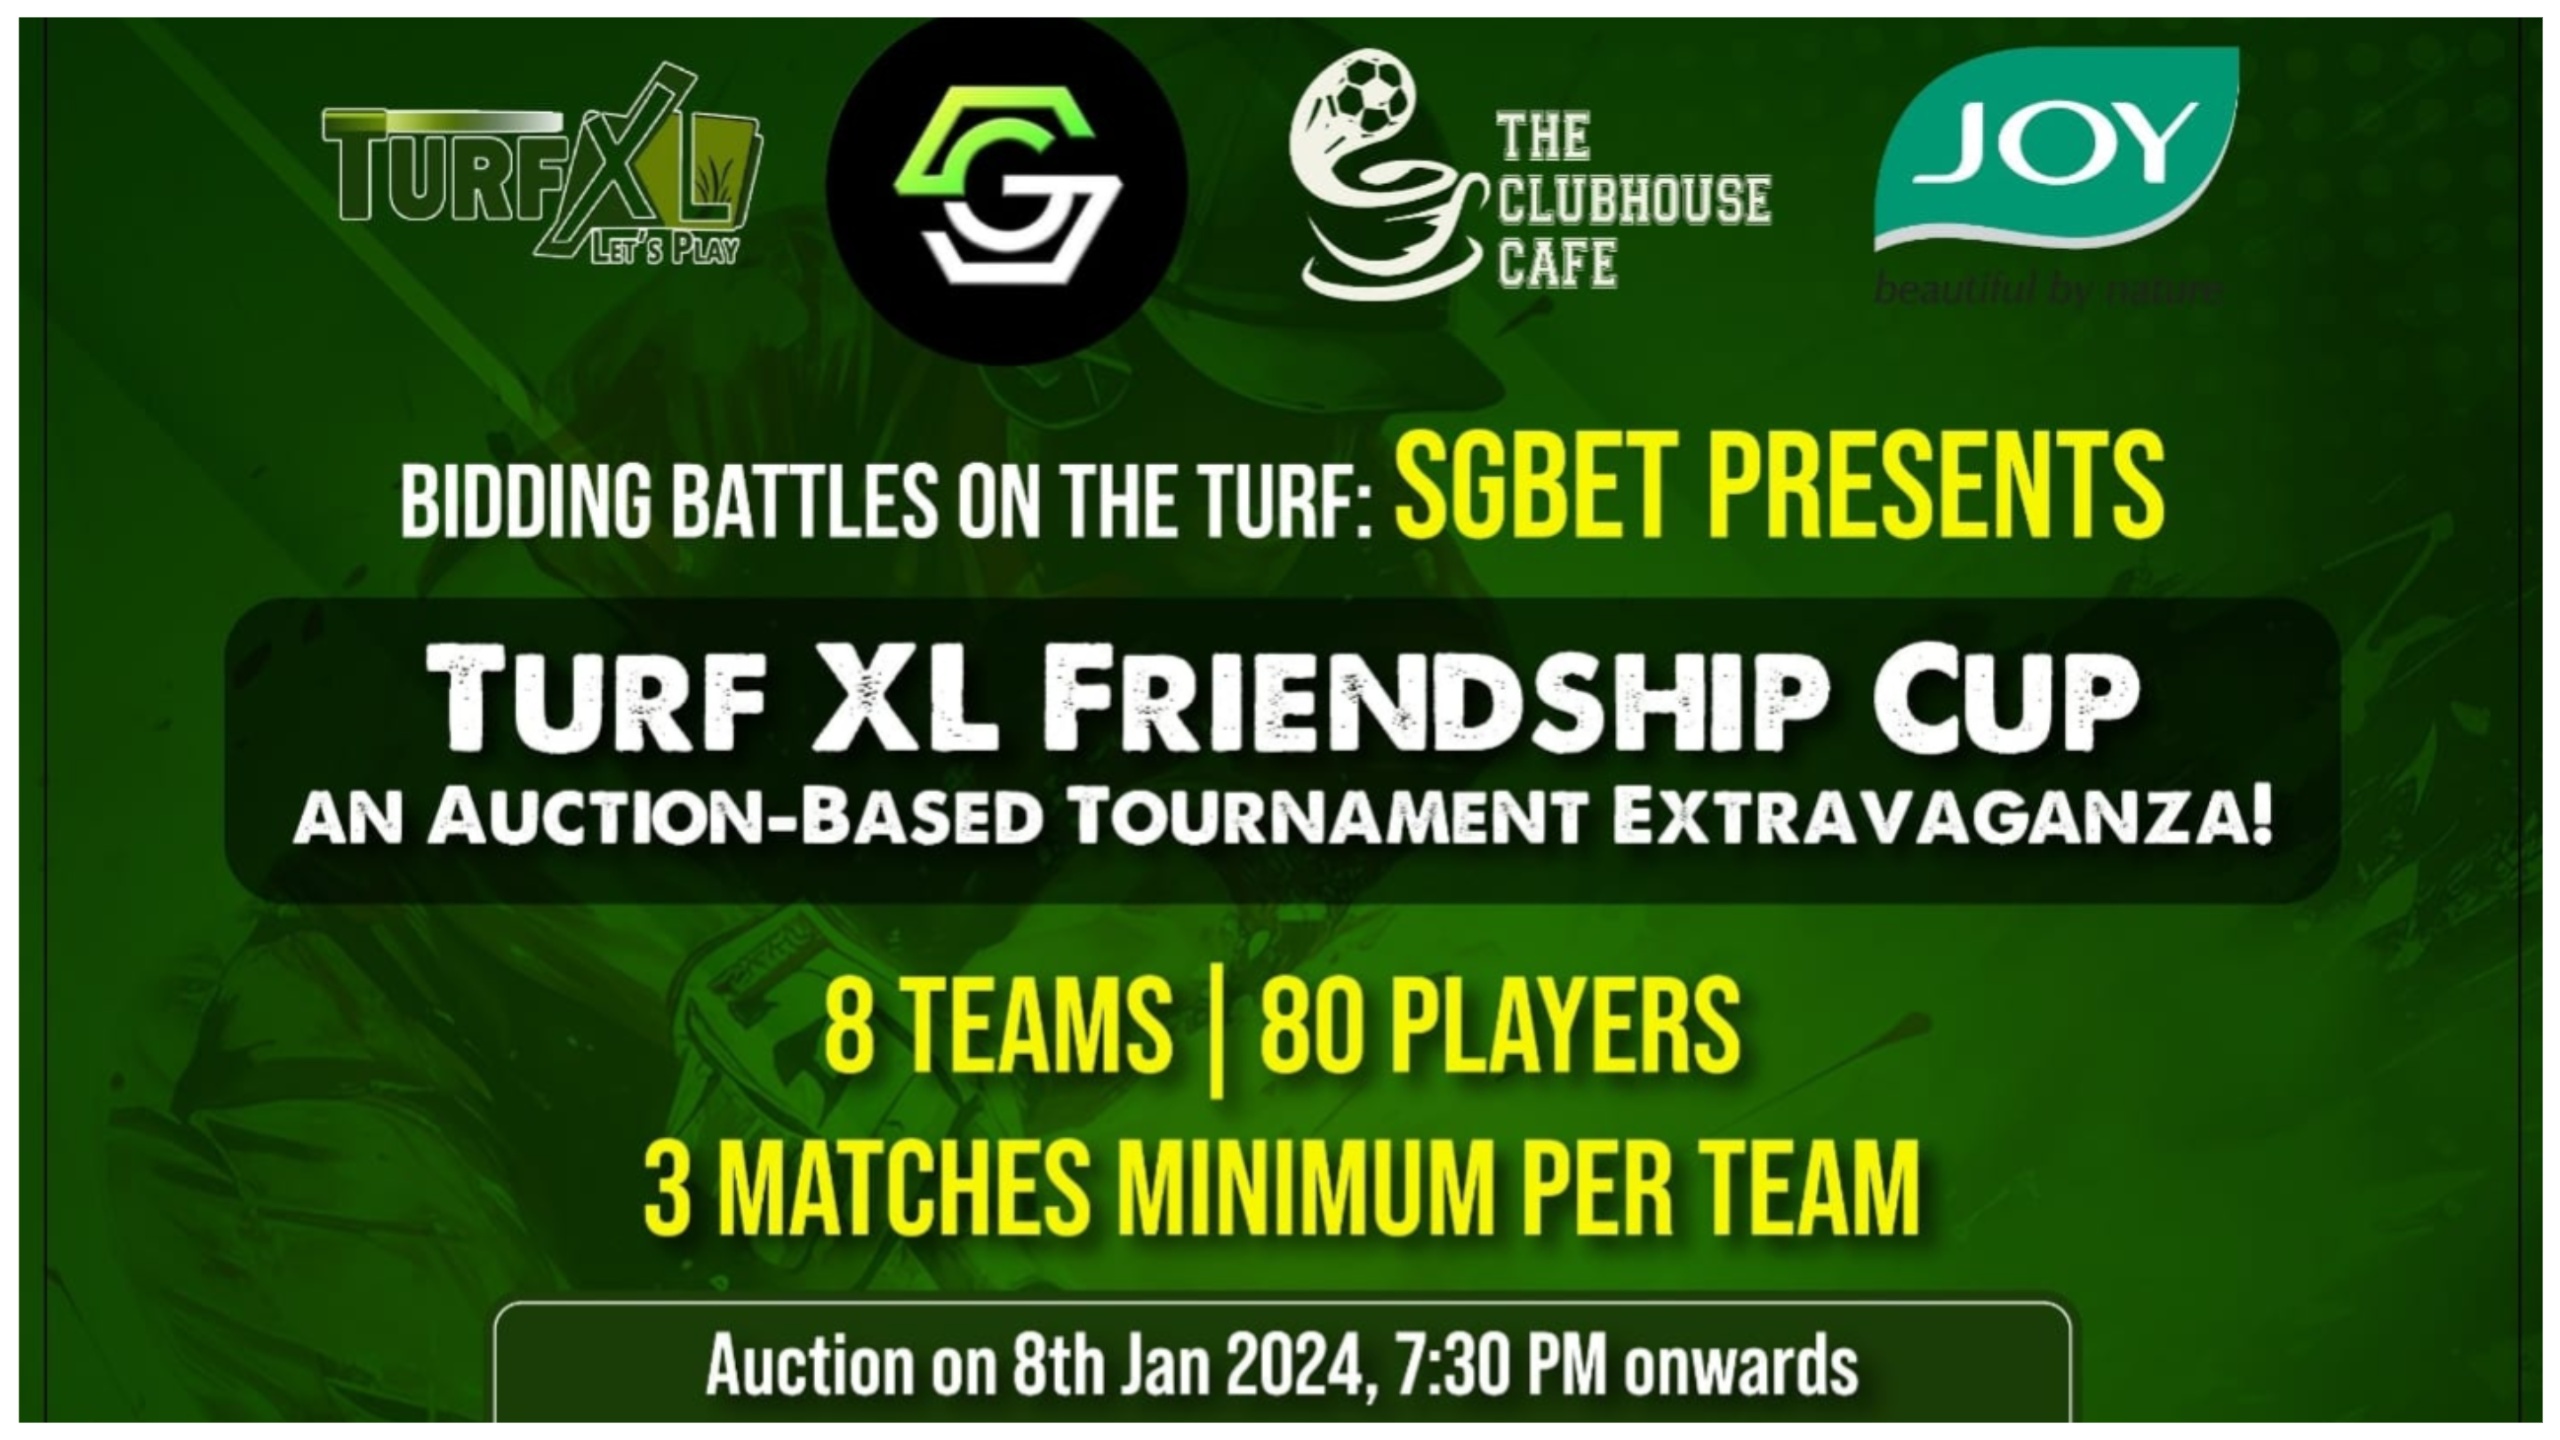 TURF XL FRIENDSHIP CUP 2024